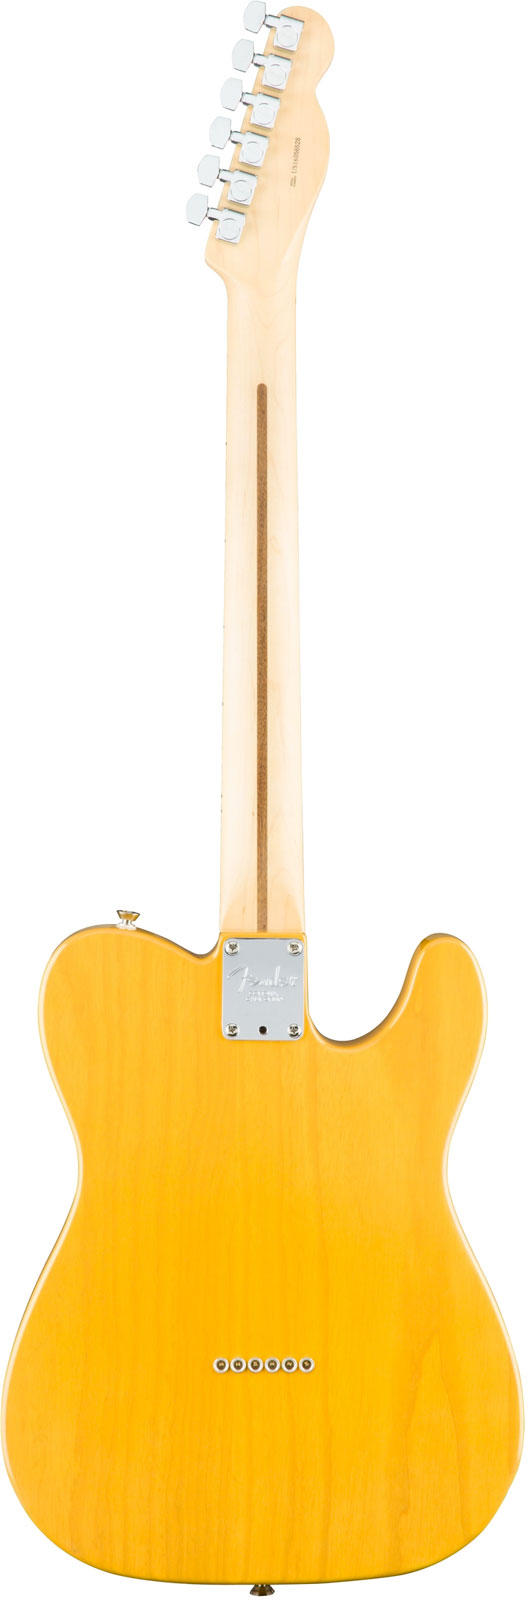 Fender Tele American Professional Lh Usa Gaucher 2s Mn - Butterscotch Blonde - Guitare Électrique Gaucher - Variation 2